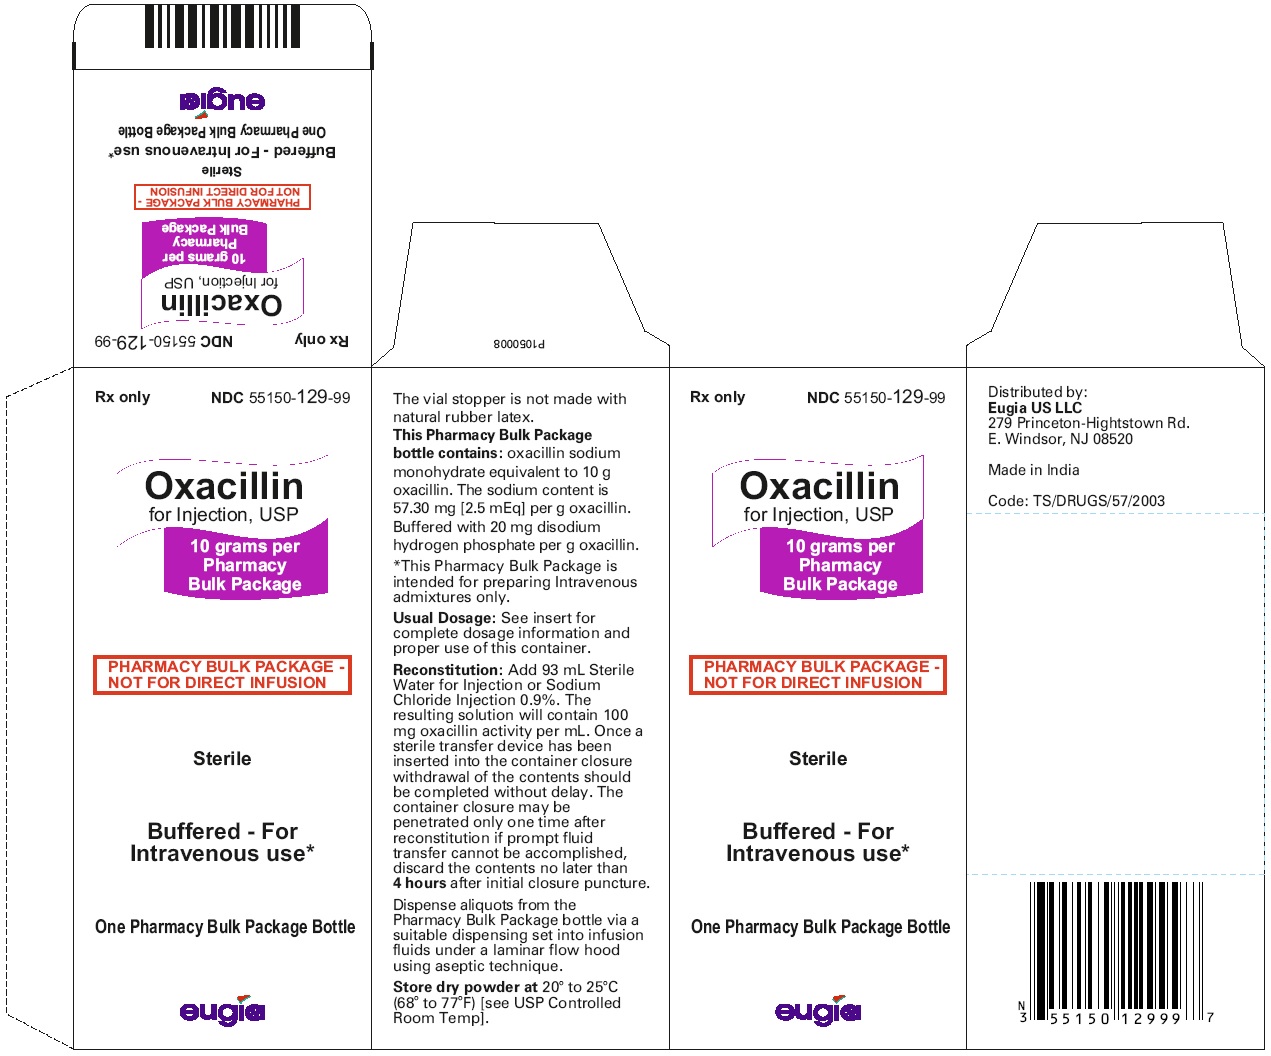 PACKAGE LABEL-PRINCIPAL DISPLAY PANEL - 10 grams Pharmacy Bulk Package Carton Label